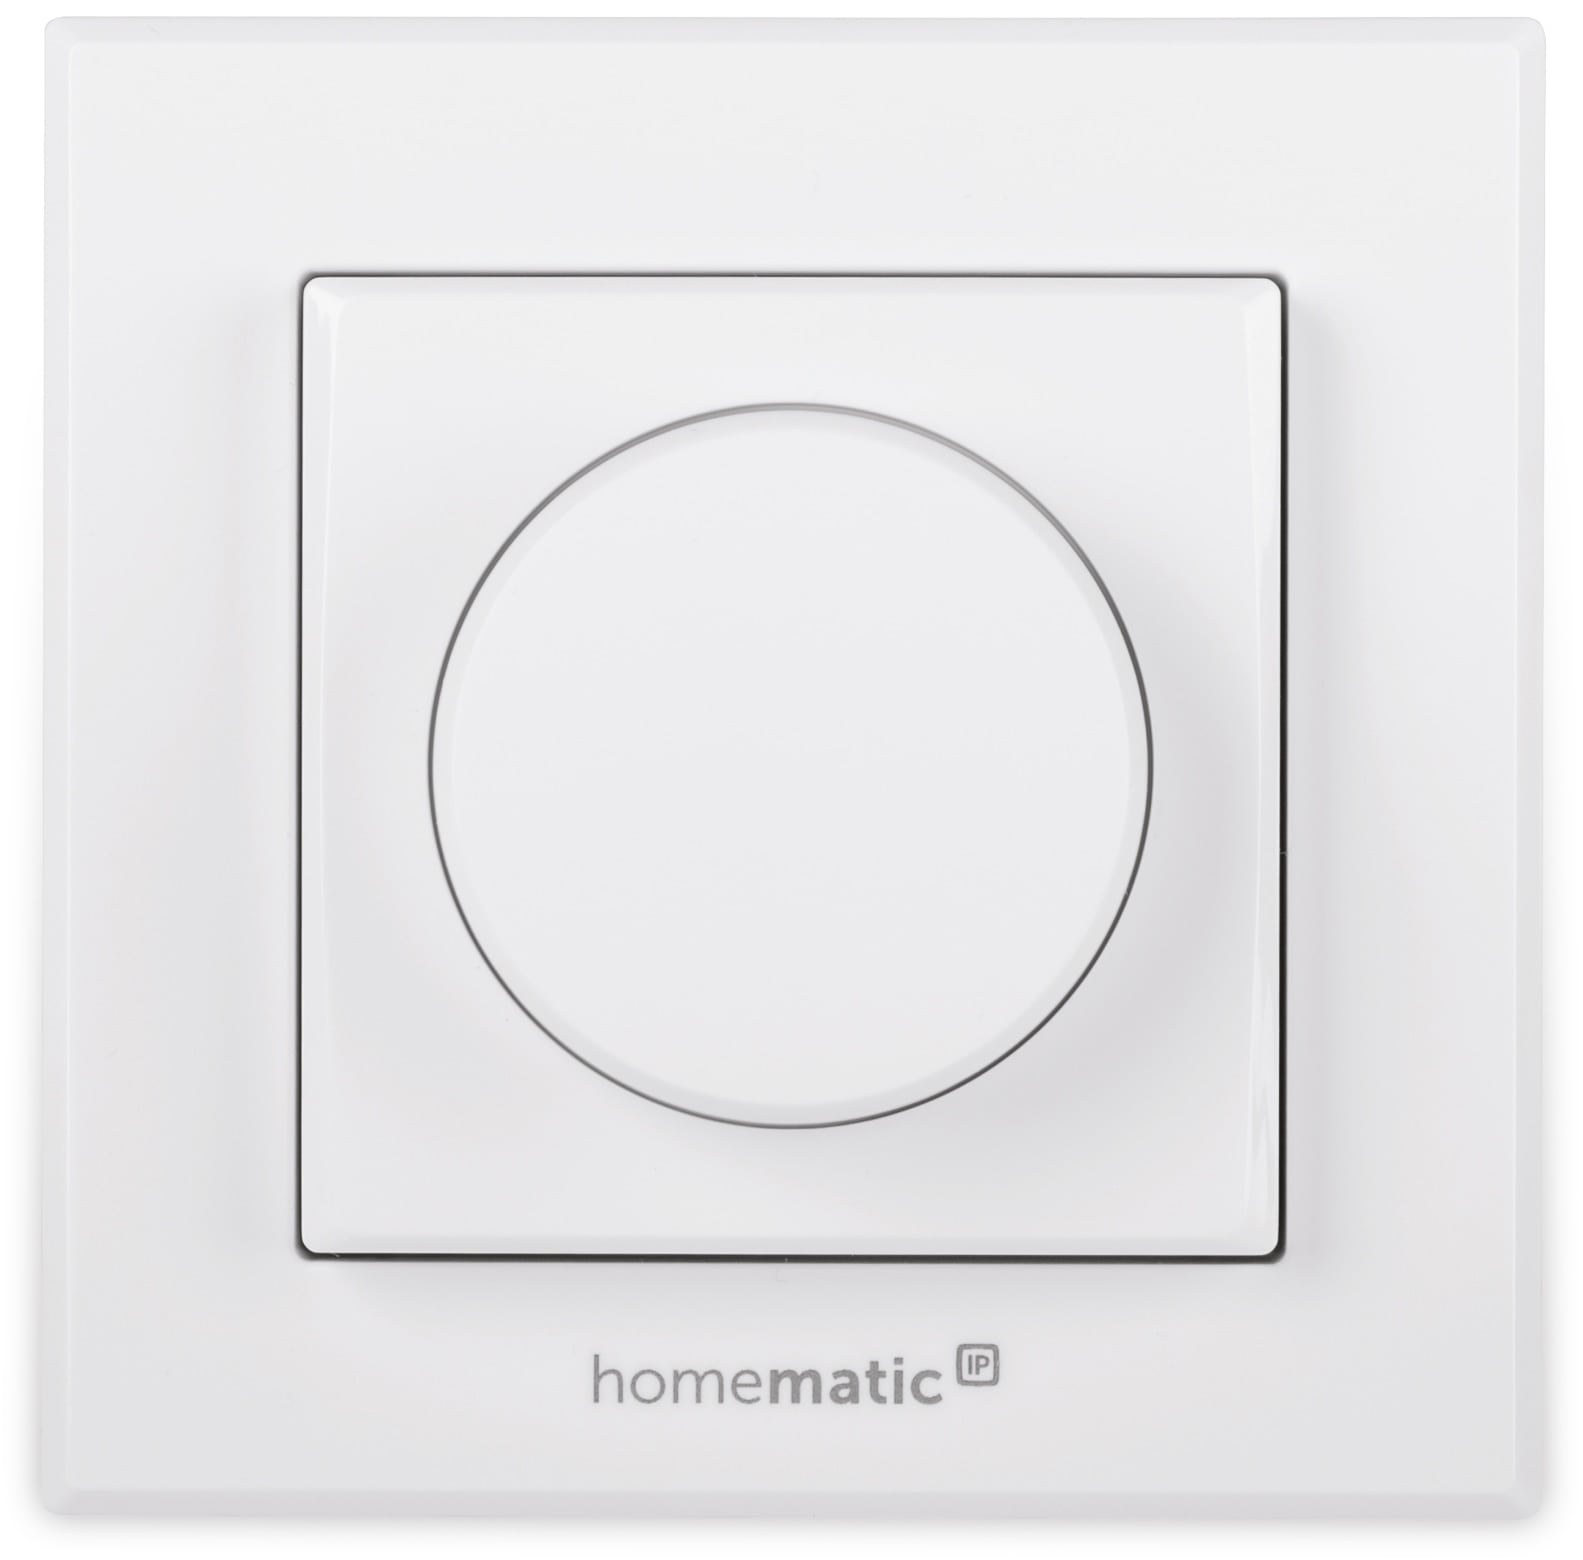 HOMEMATIC IP Smart Home 154888A0 Drehtaster